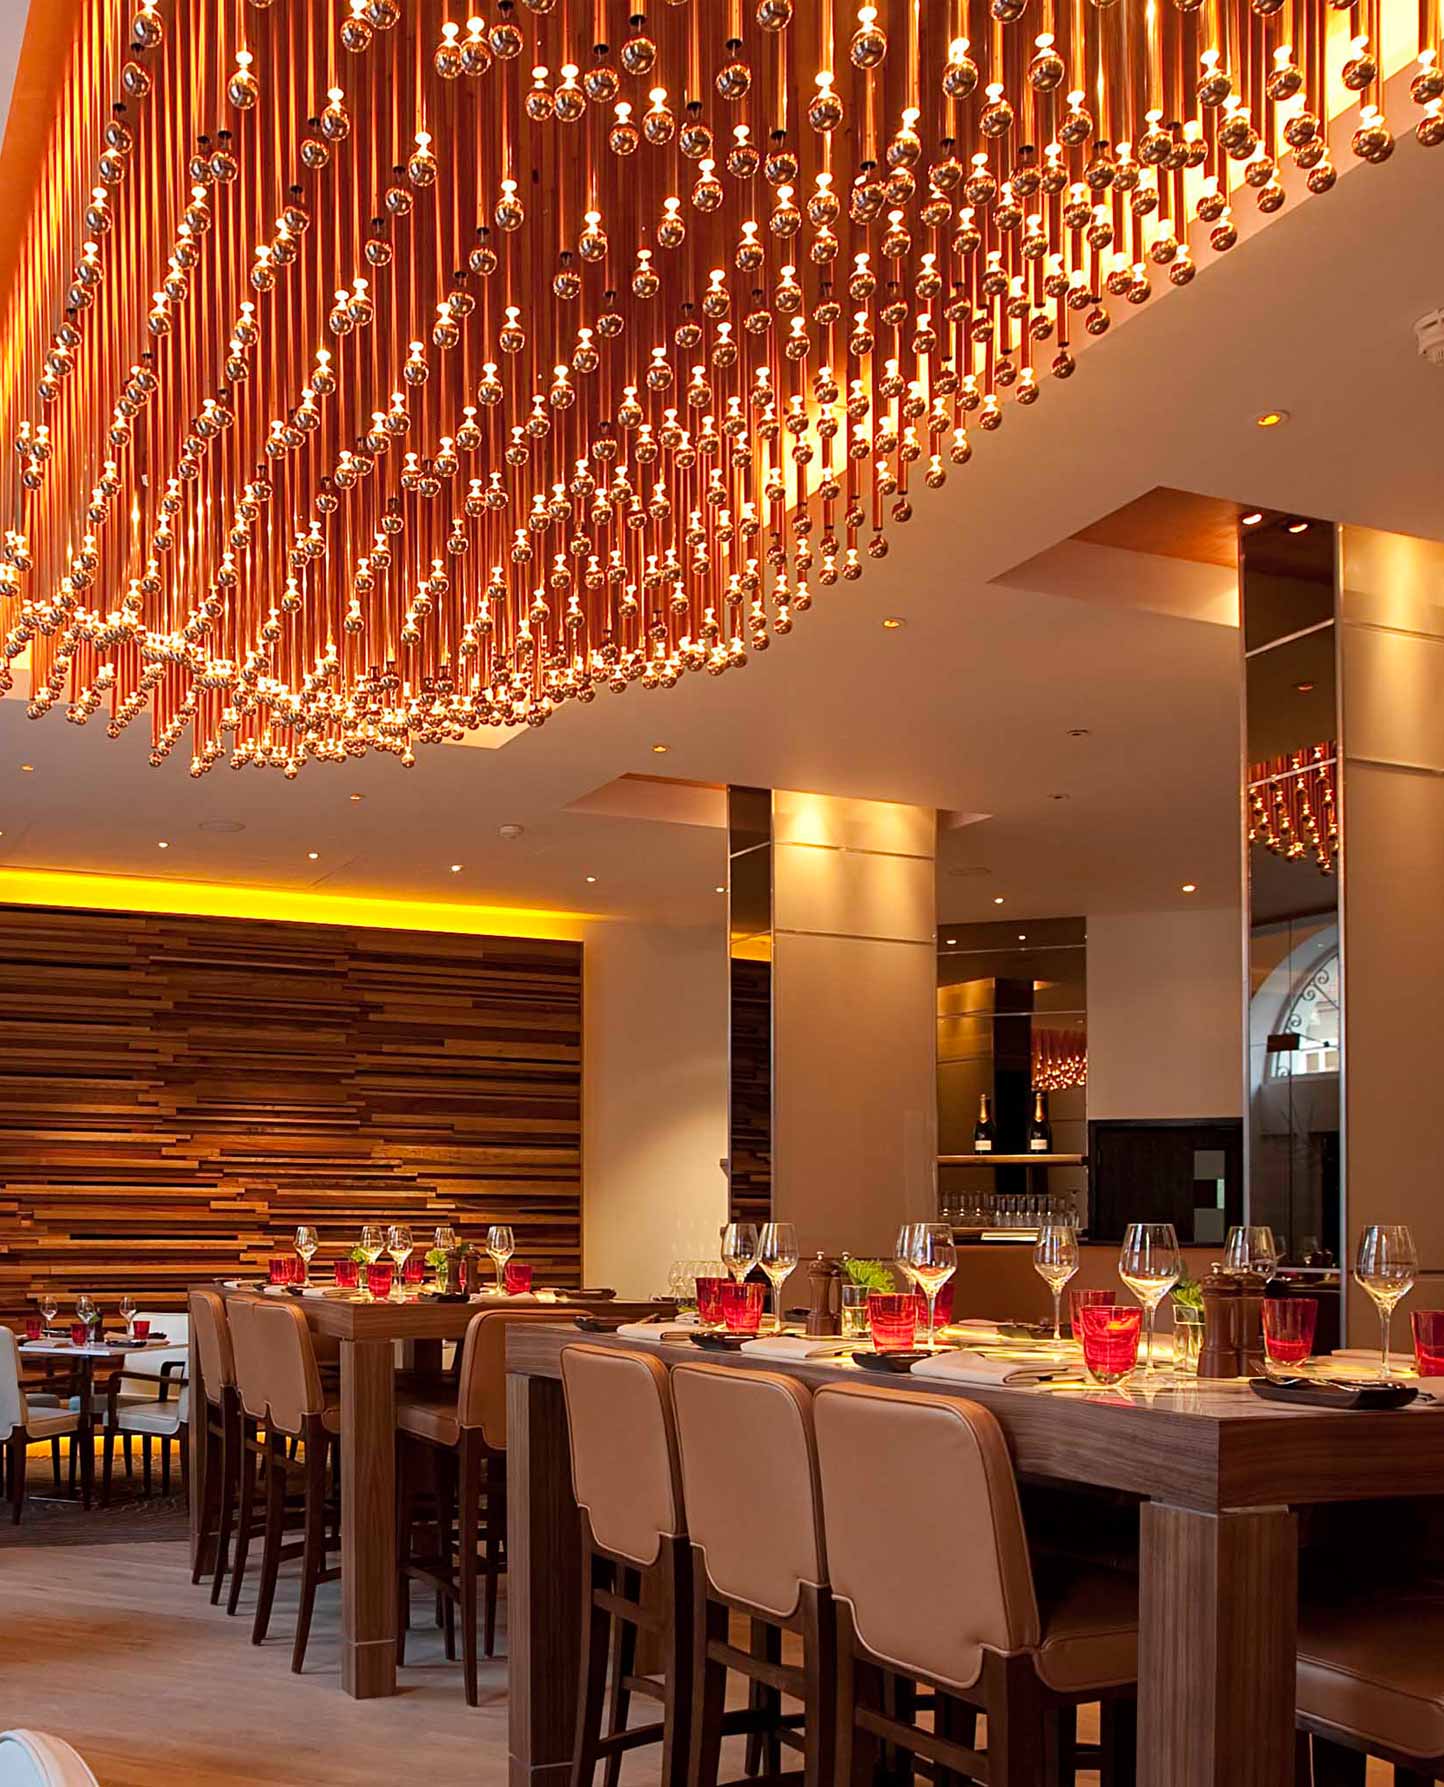 Custom Copper Flame Chandelier Light Sculpture Restaurant Dining Room Nulty Bespoke